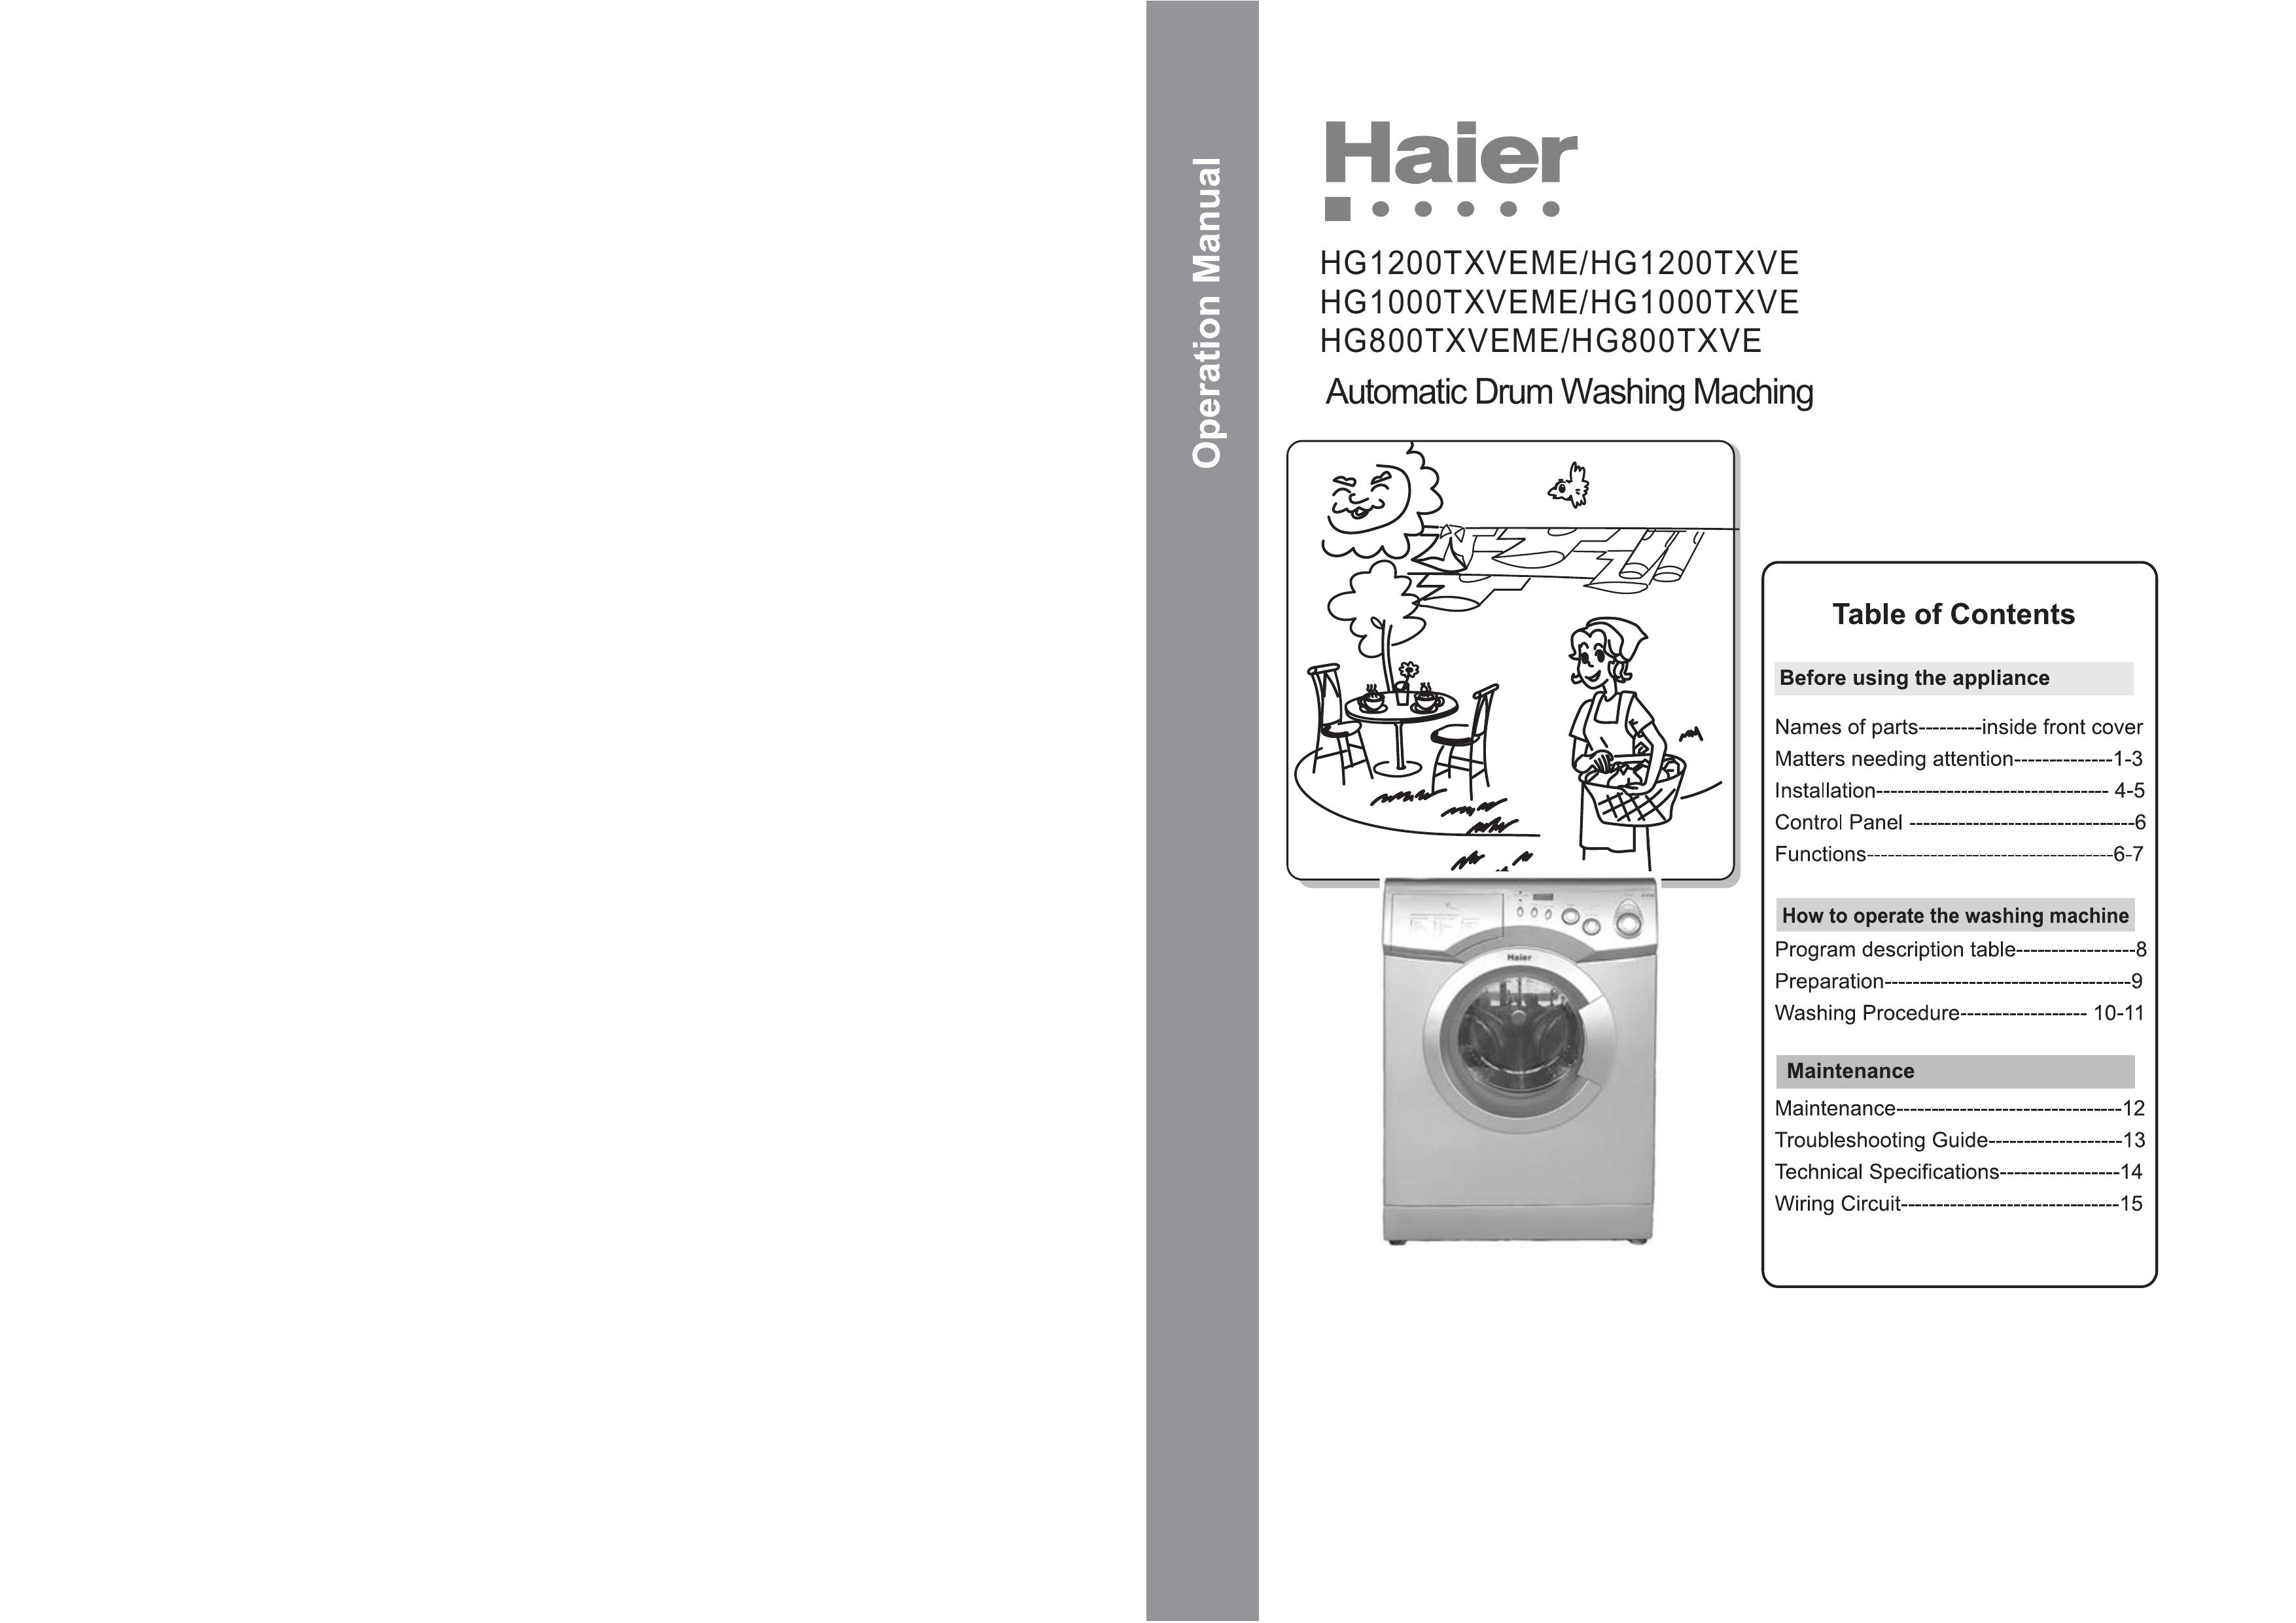 Haier HG800TXVEME Washer/Dryer User Manual